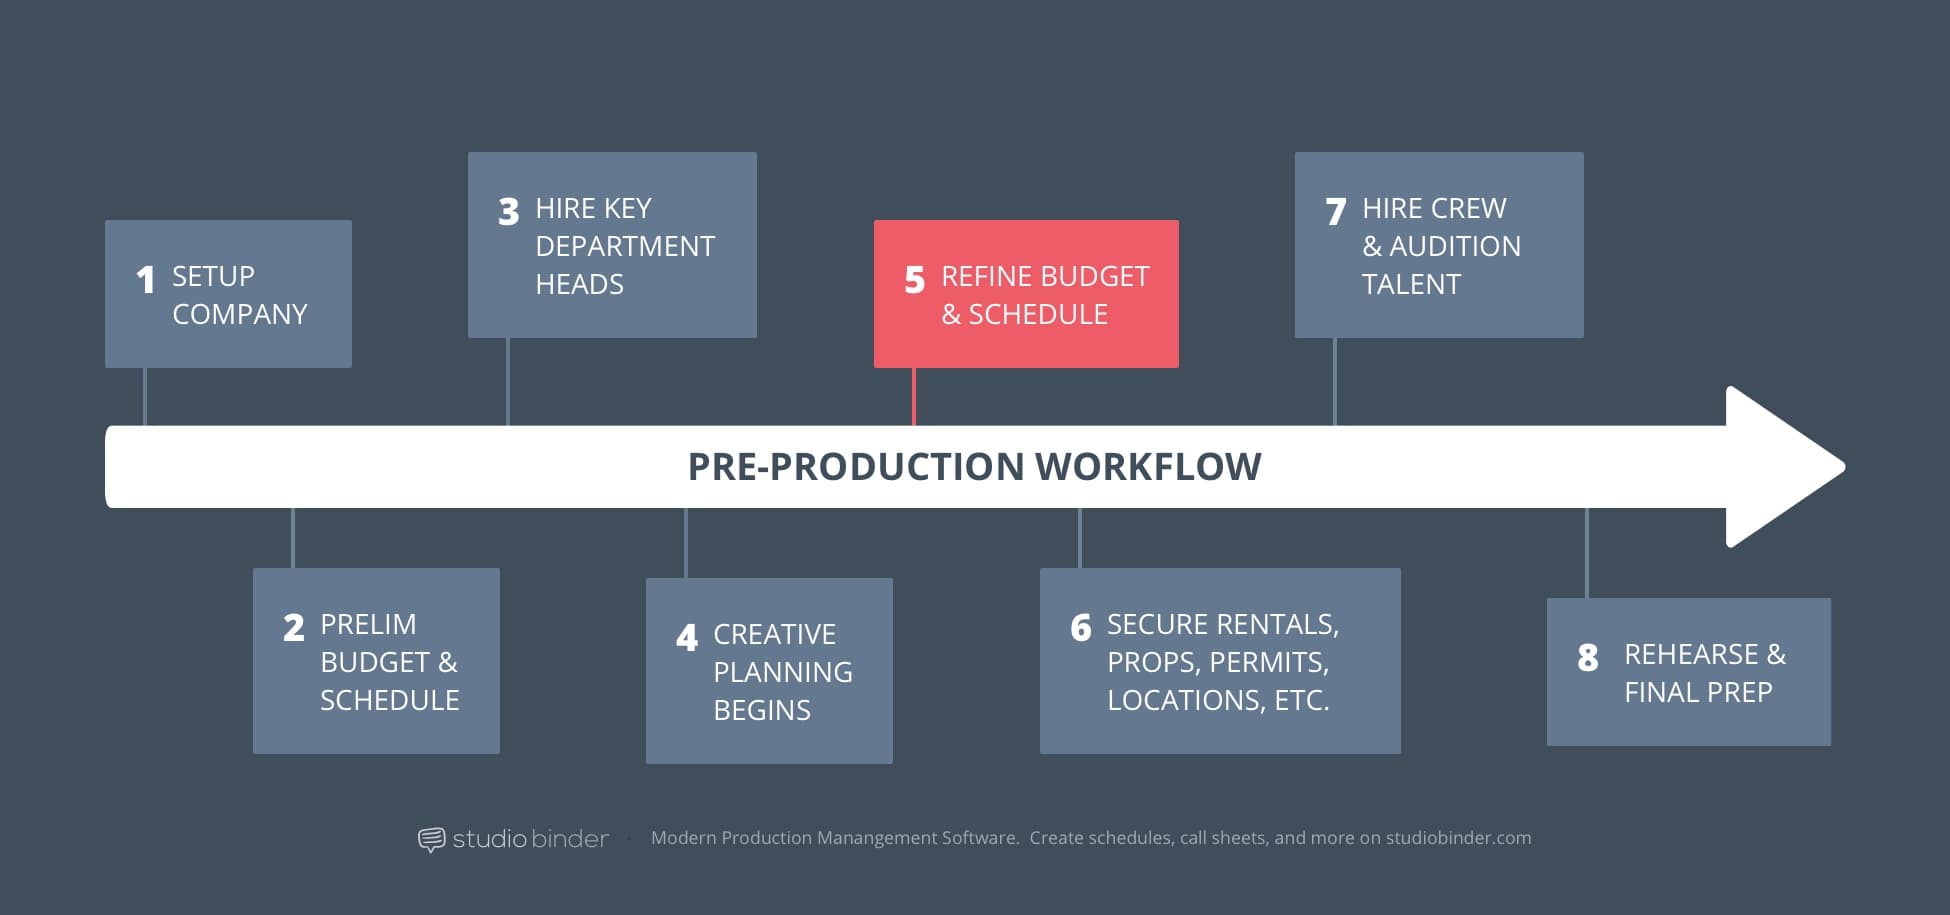 5 - StudioBinder Pre-Production Workflow - Refine Budget and Schedule